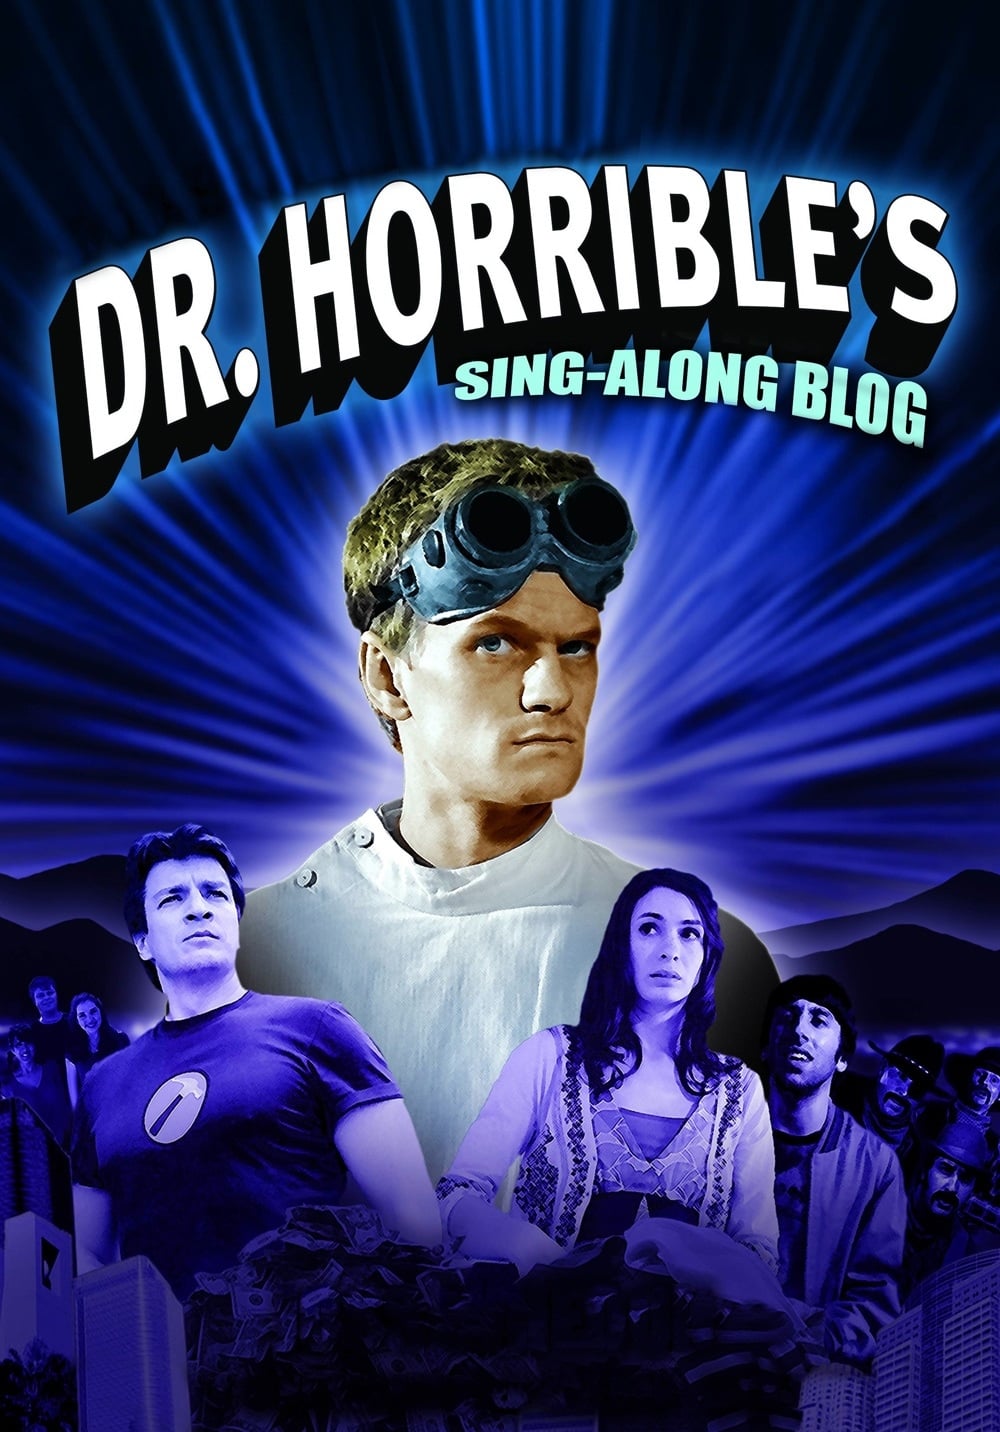 Dr. Horrible's Sing-Along Blog TV Shows About Super Villain